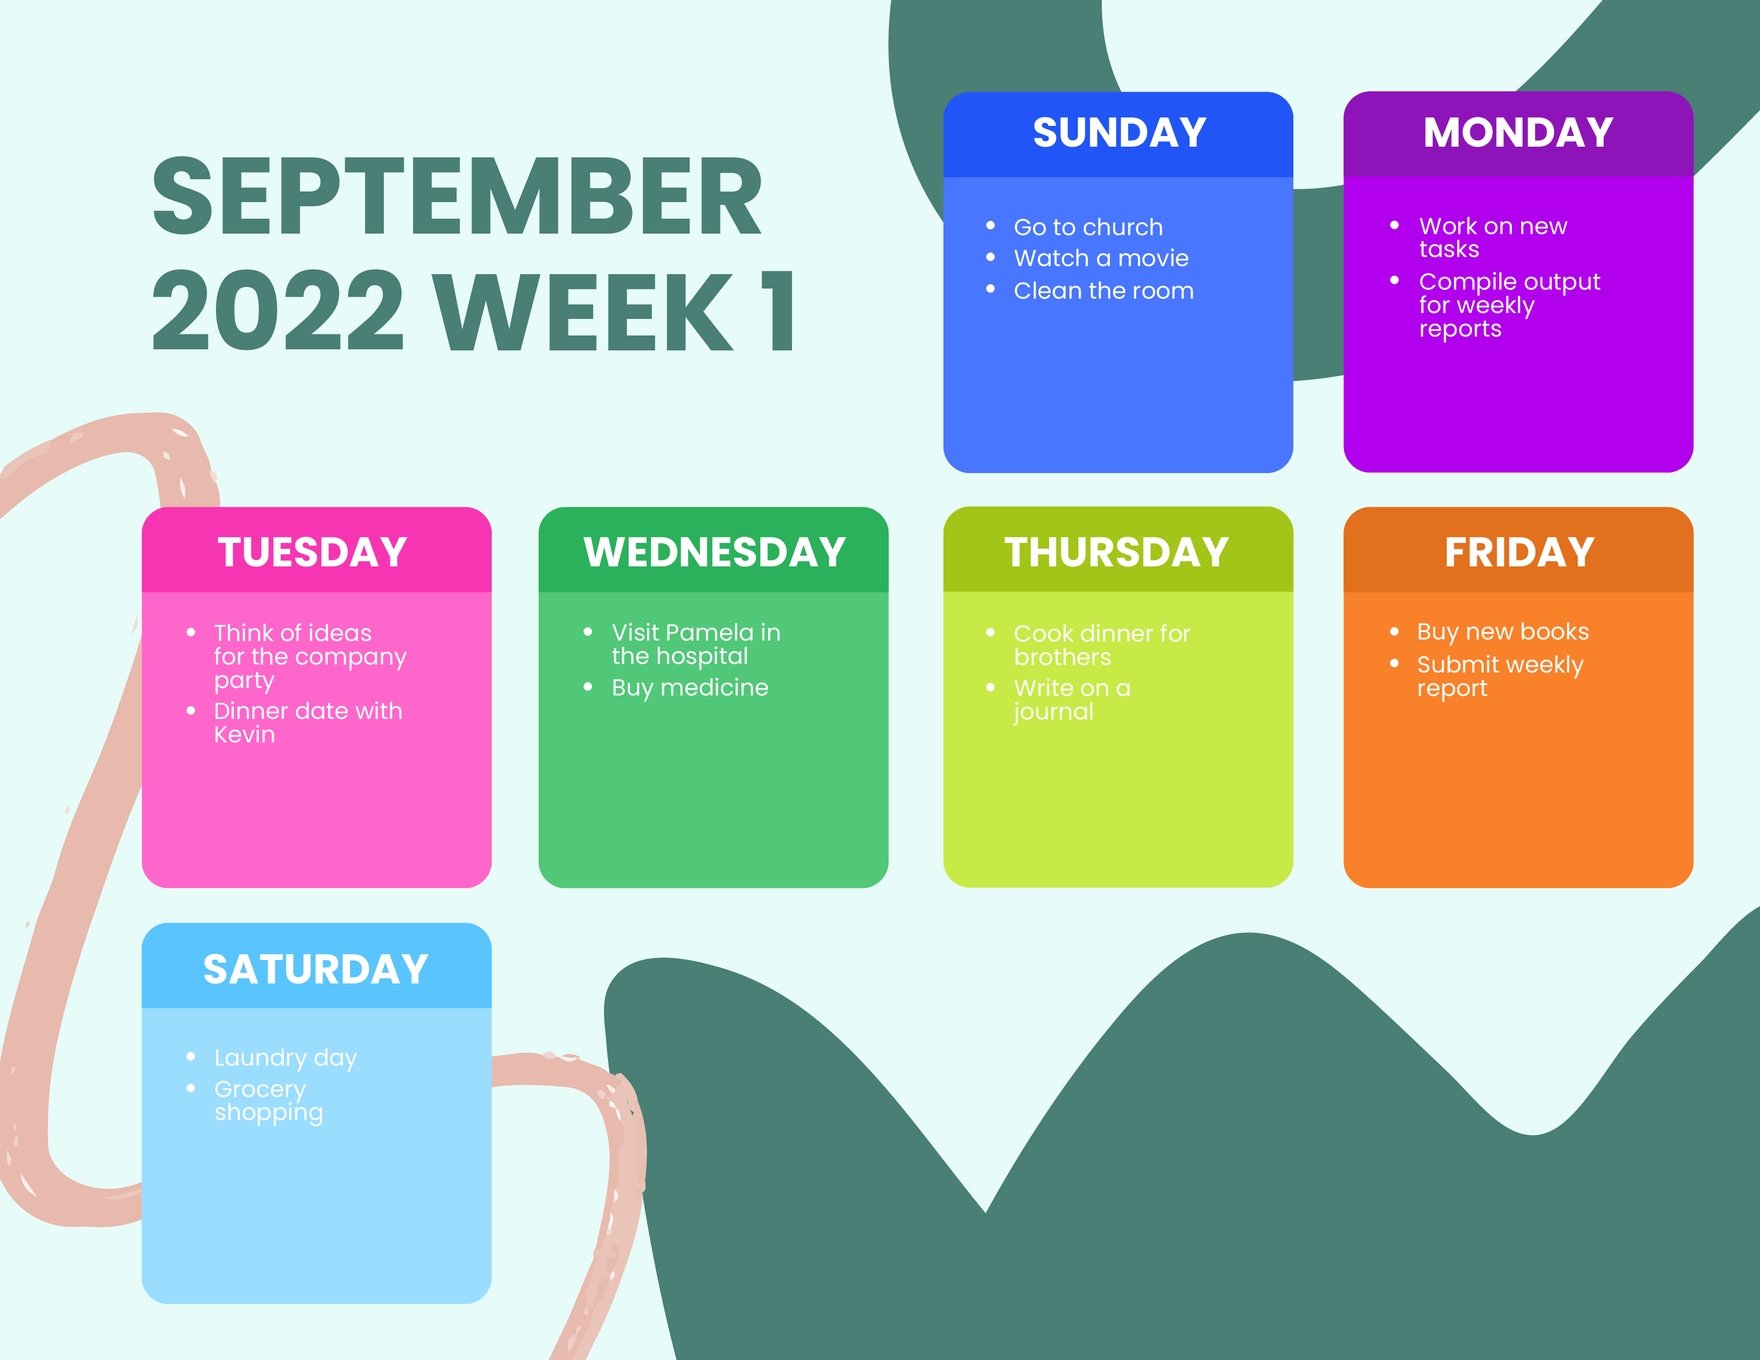 Weekly September 2022 Calendar Template in Word, Illustrator, PSD